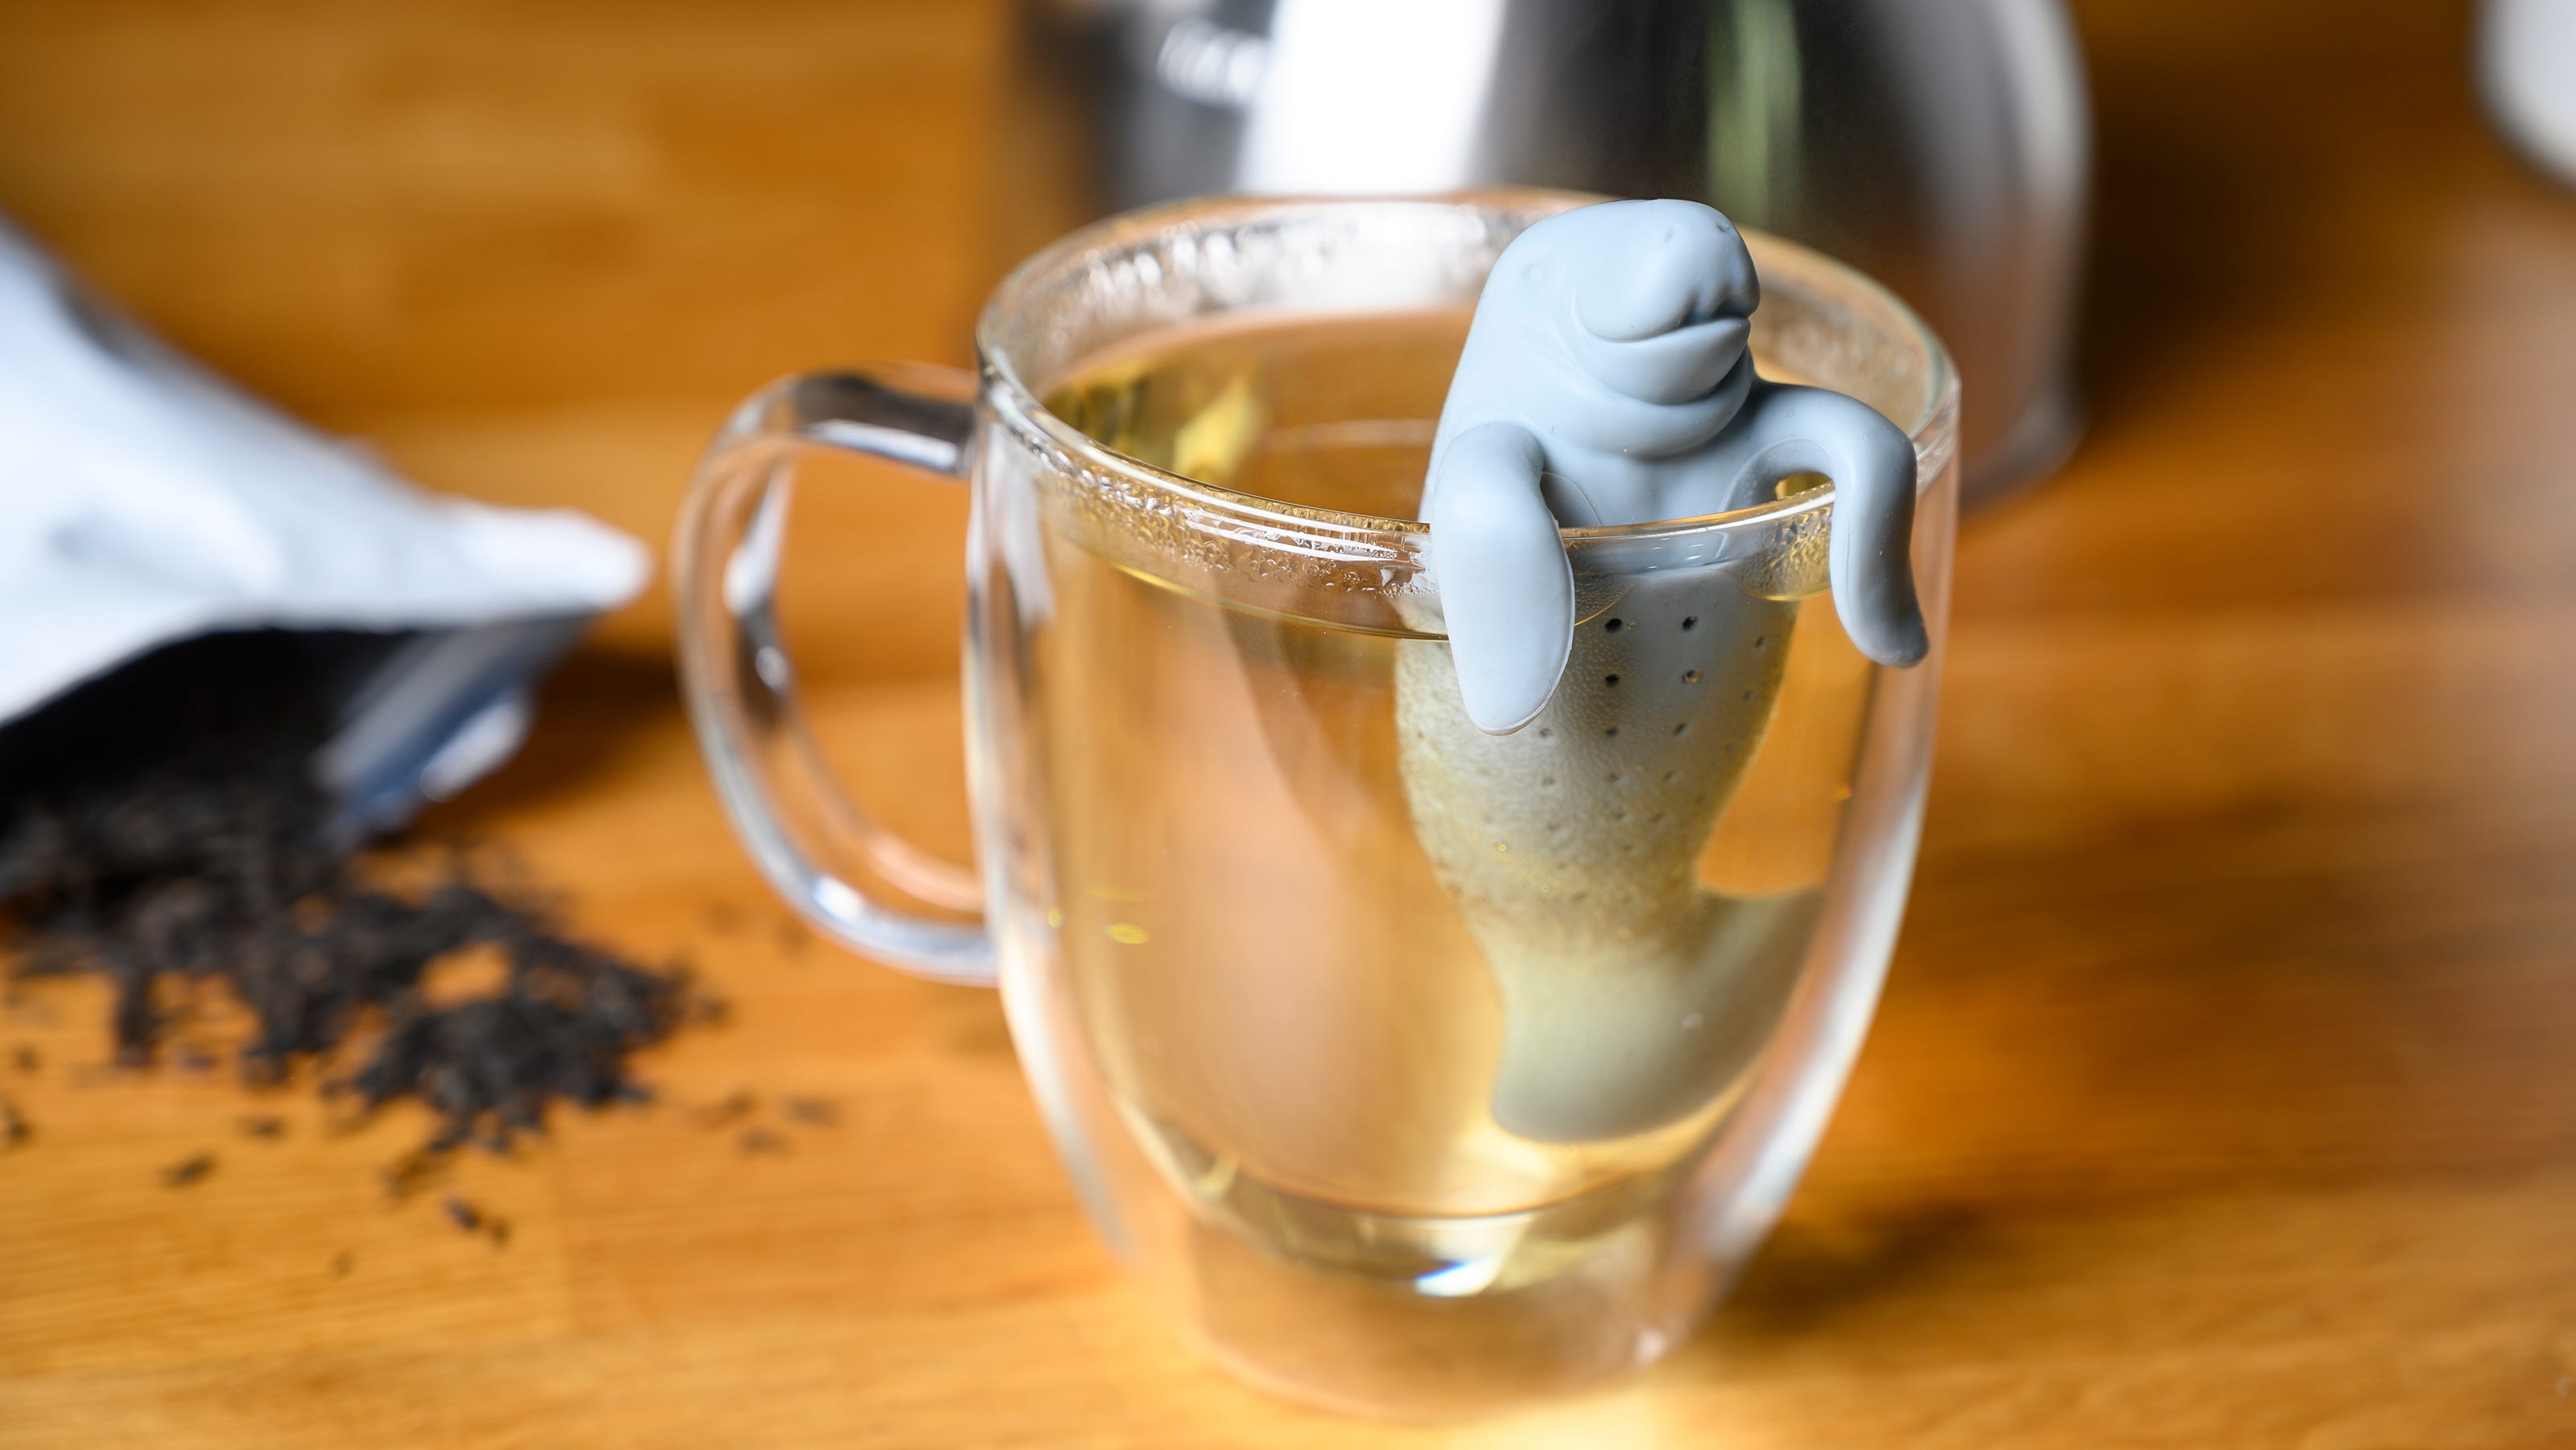 Purr Tea Tea Infuser – Archie McPhee